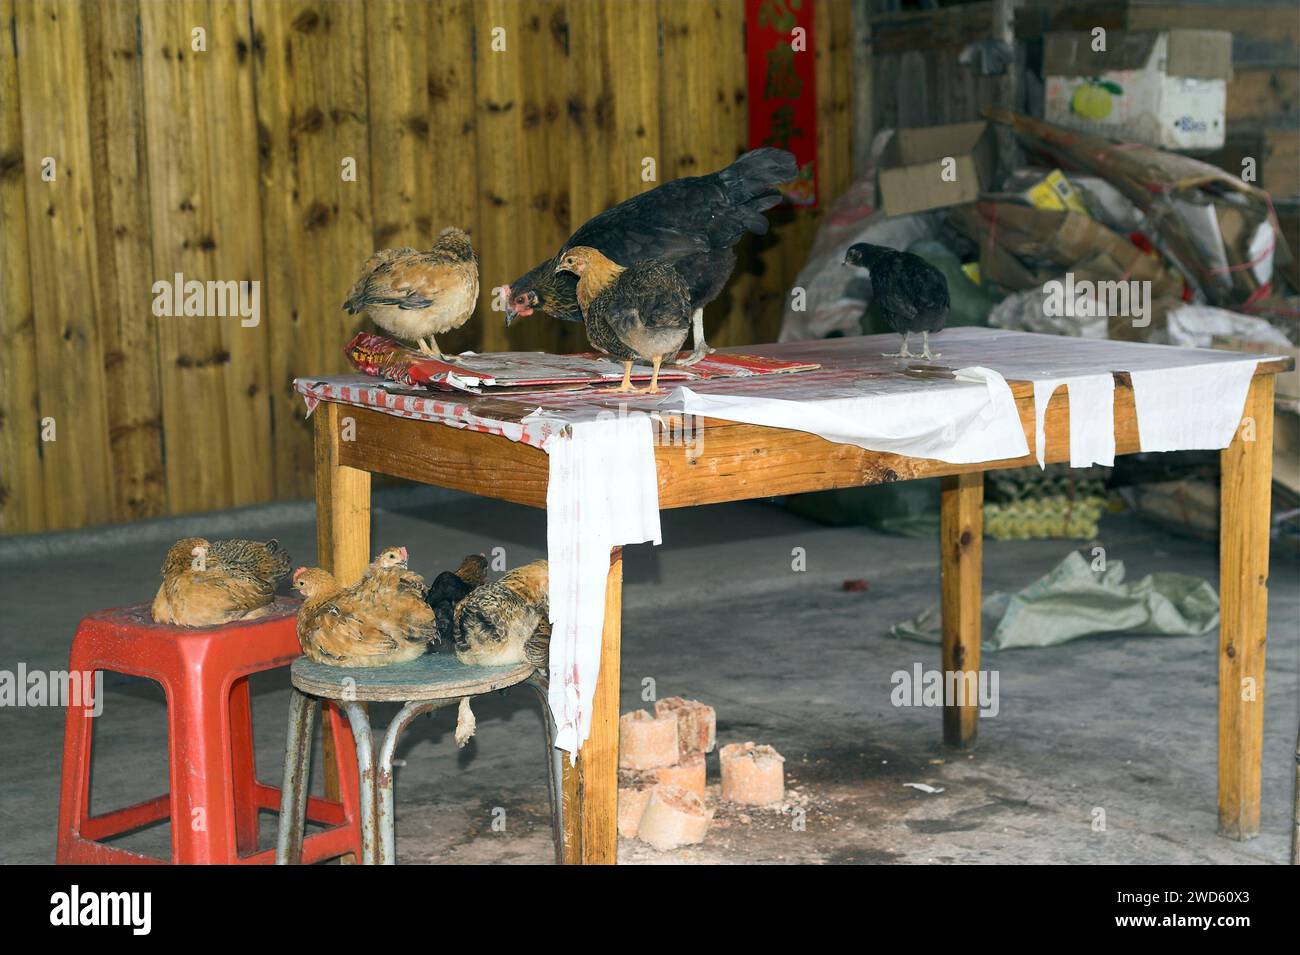 龙胜镇 (龙胜县) 中國 Longsheng, Dazhai Longji Ping'an Zhuang, China; Una gallina con pollitos caminando sobre la mesa; Eine Henne mit Küken läuft auf dem Tisch Foto de stock